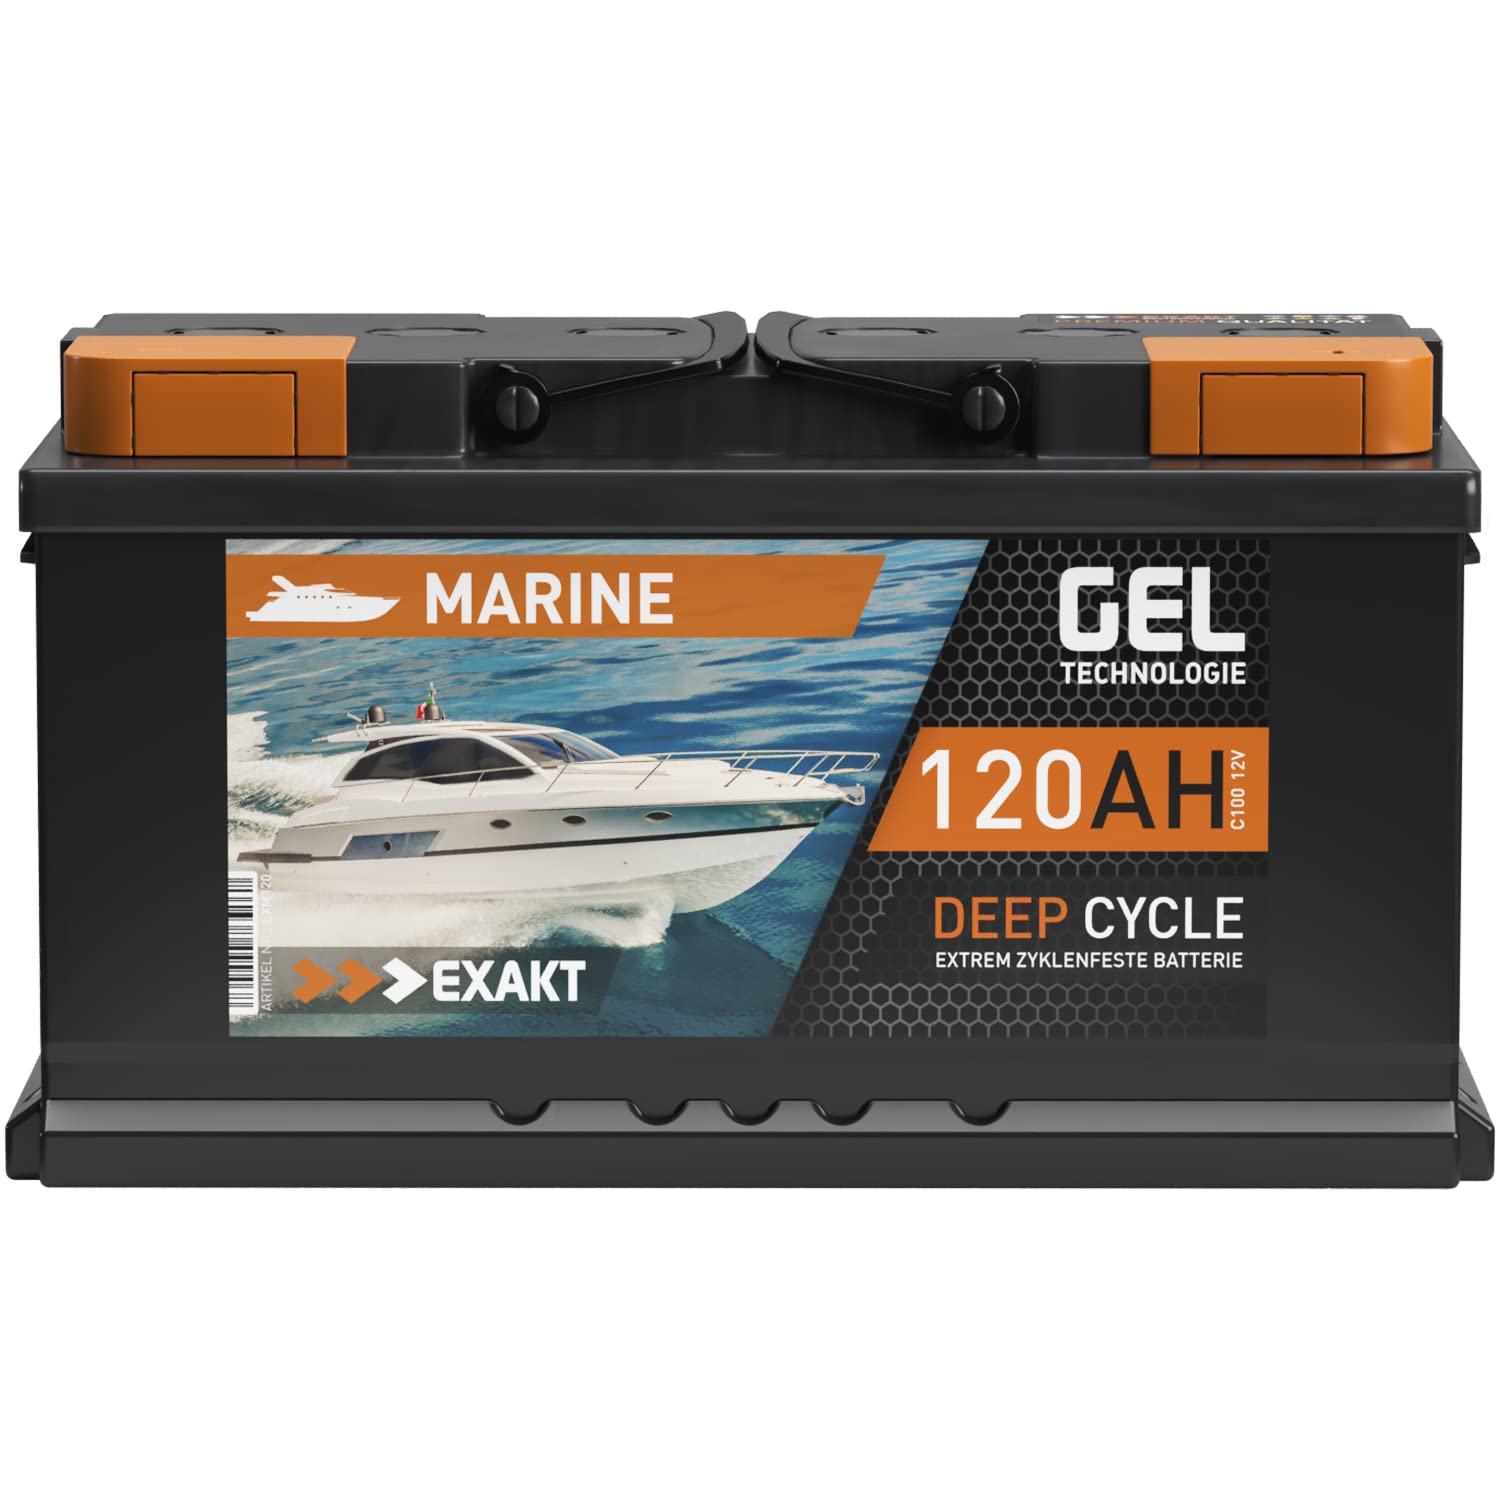 EXAKT GEL Batterie 12V 120Ah Bootsbatterie Marine Schiff Versorgung Solarbatterie Gelbatterie Gel Akku ersetzt 100Ah 110Ah von Exakt